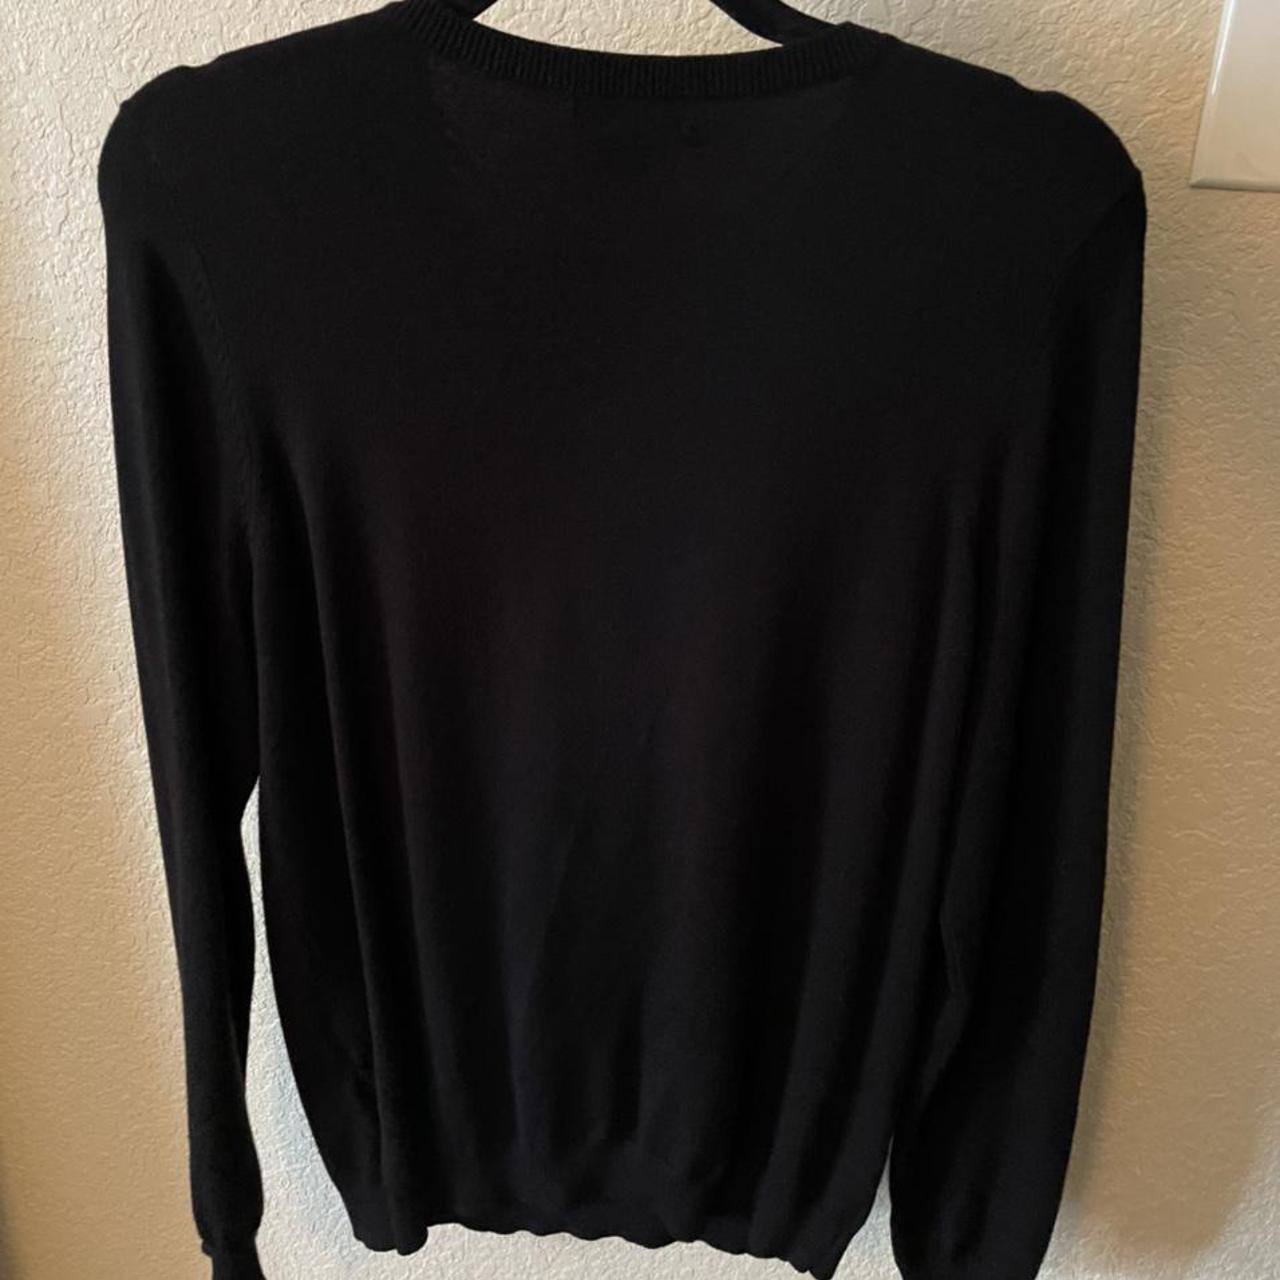 Product Image 2 - H&M black knitted crewneck sweatshirt
Lightweight